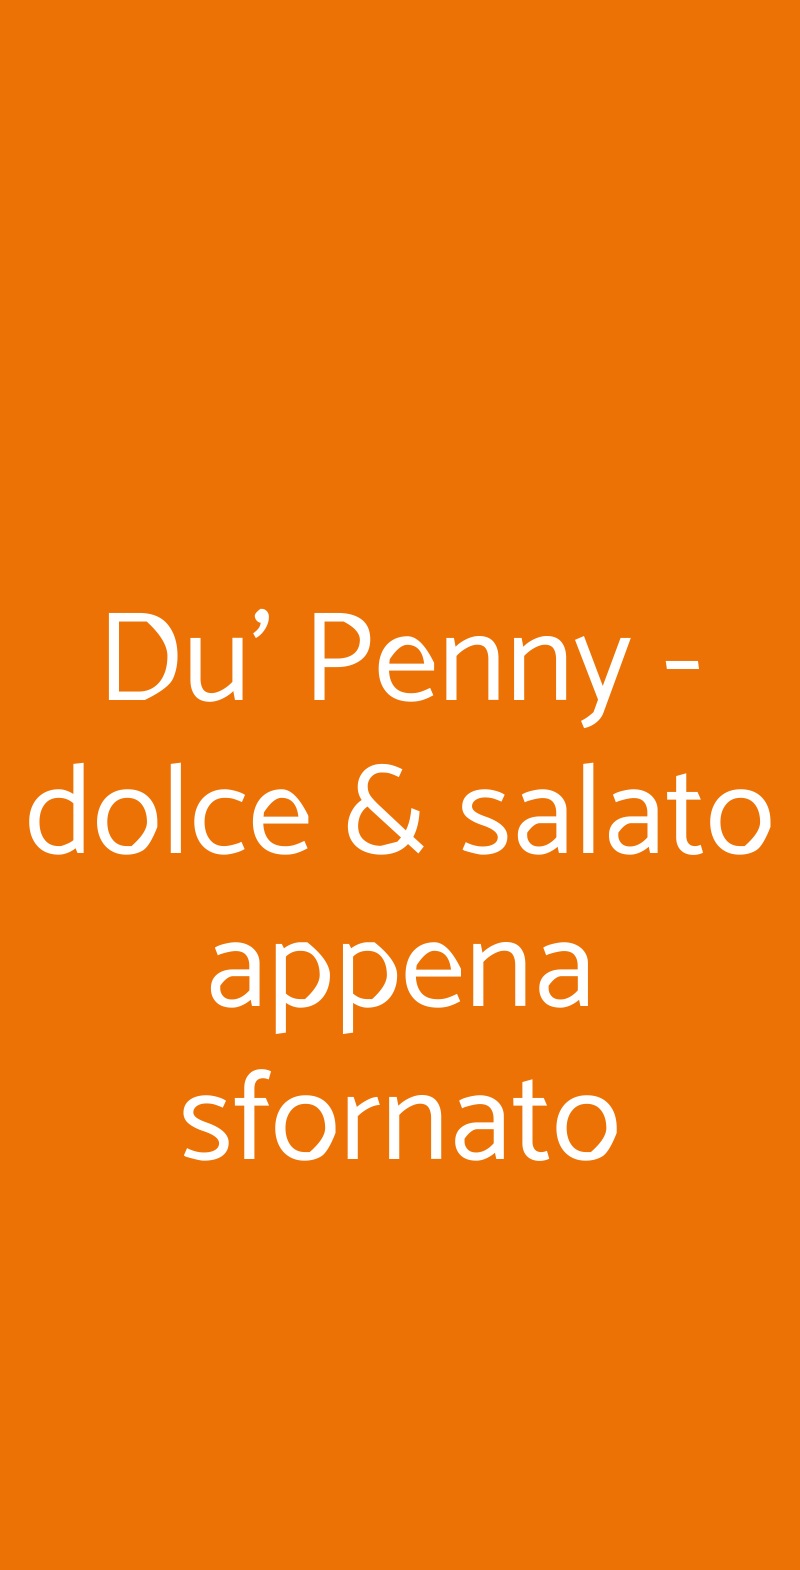 Du' Penny - dolce & salato appena sfornato Roma menù 1 pagina